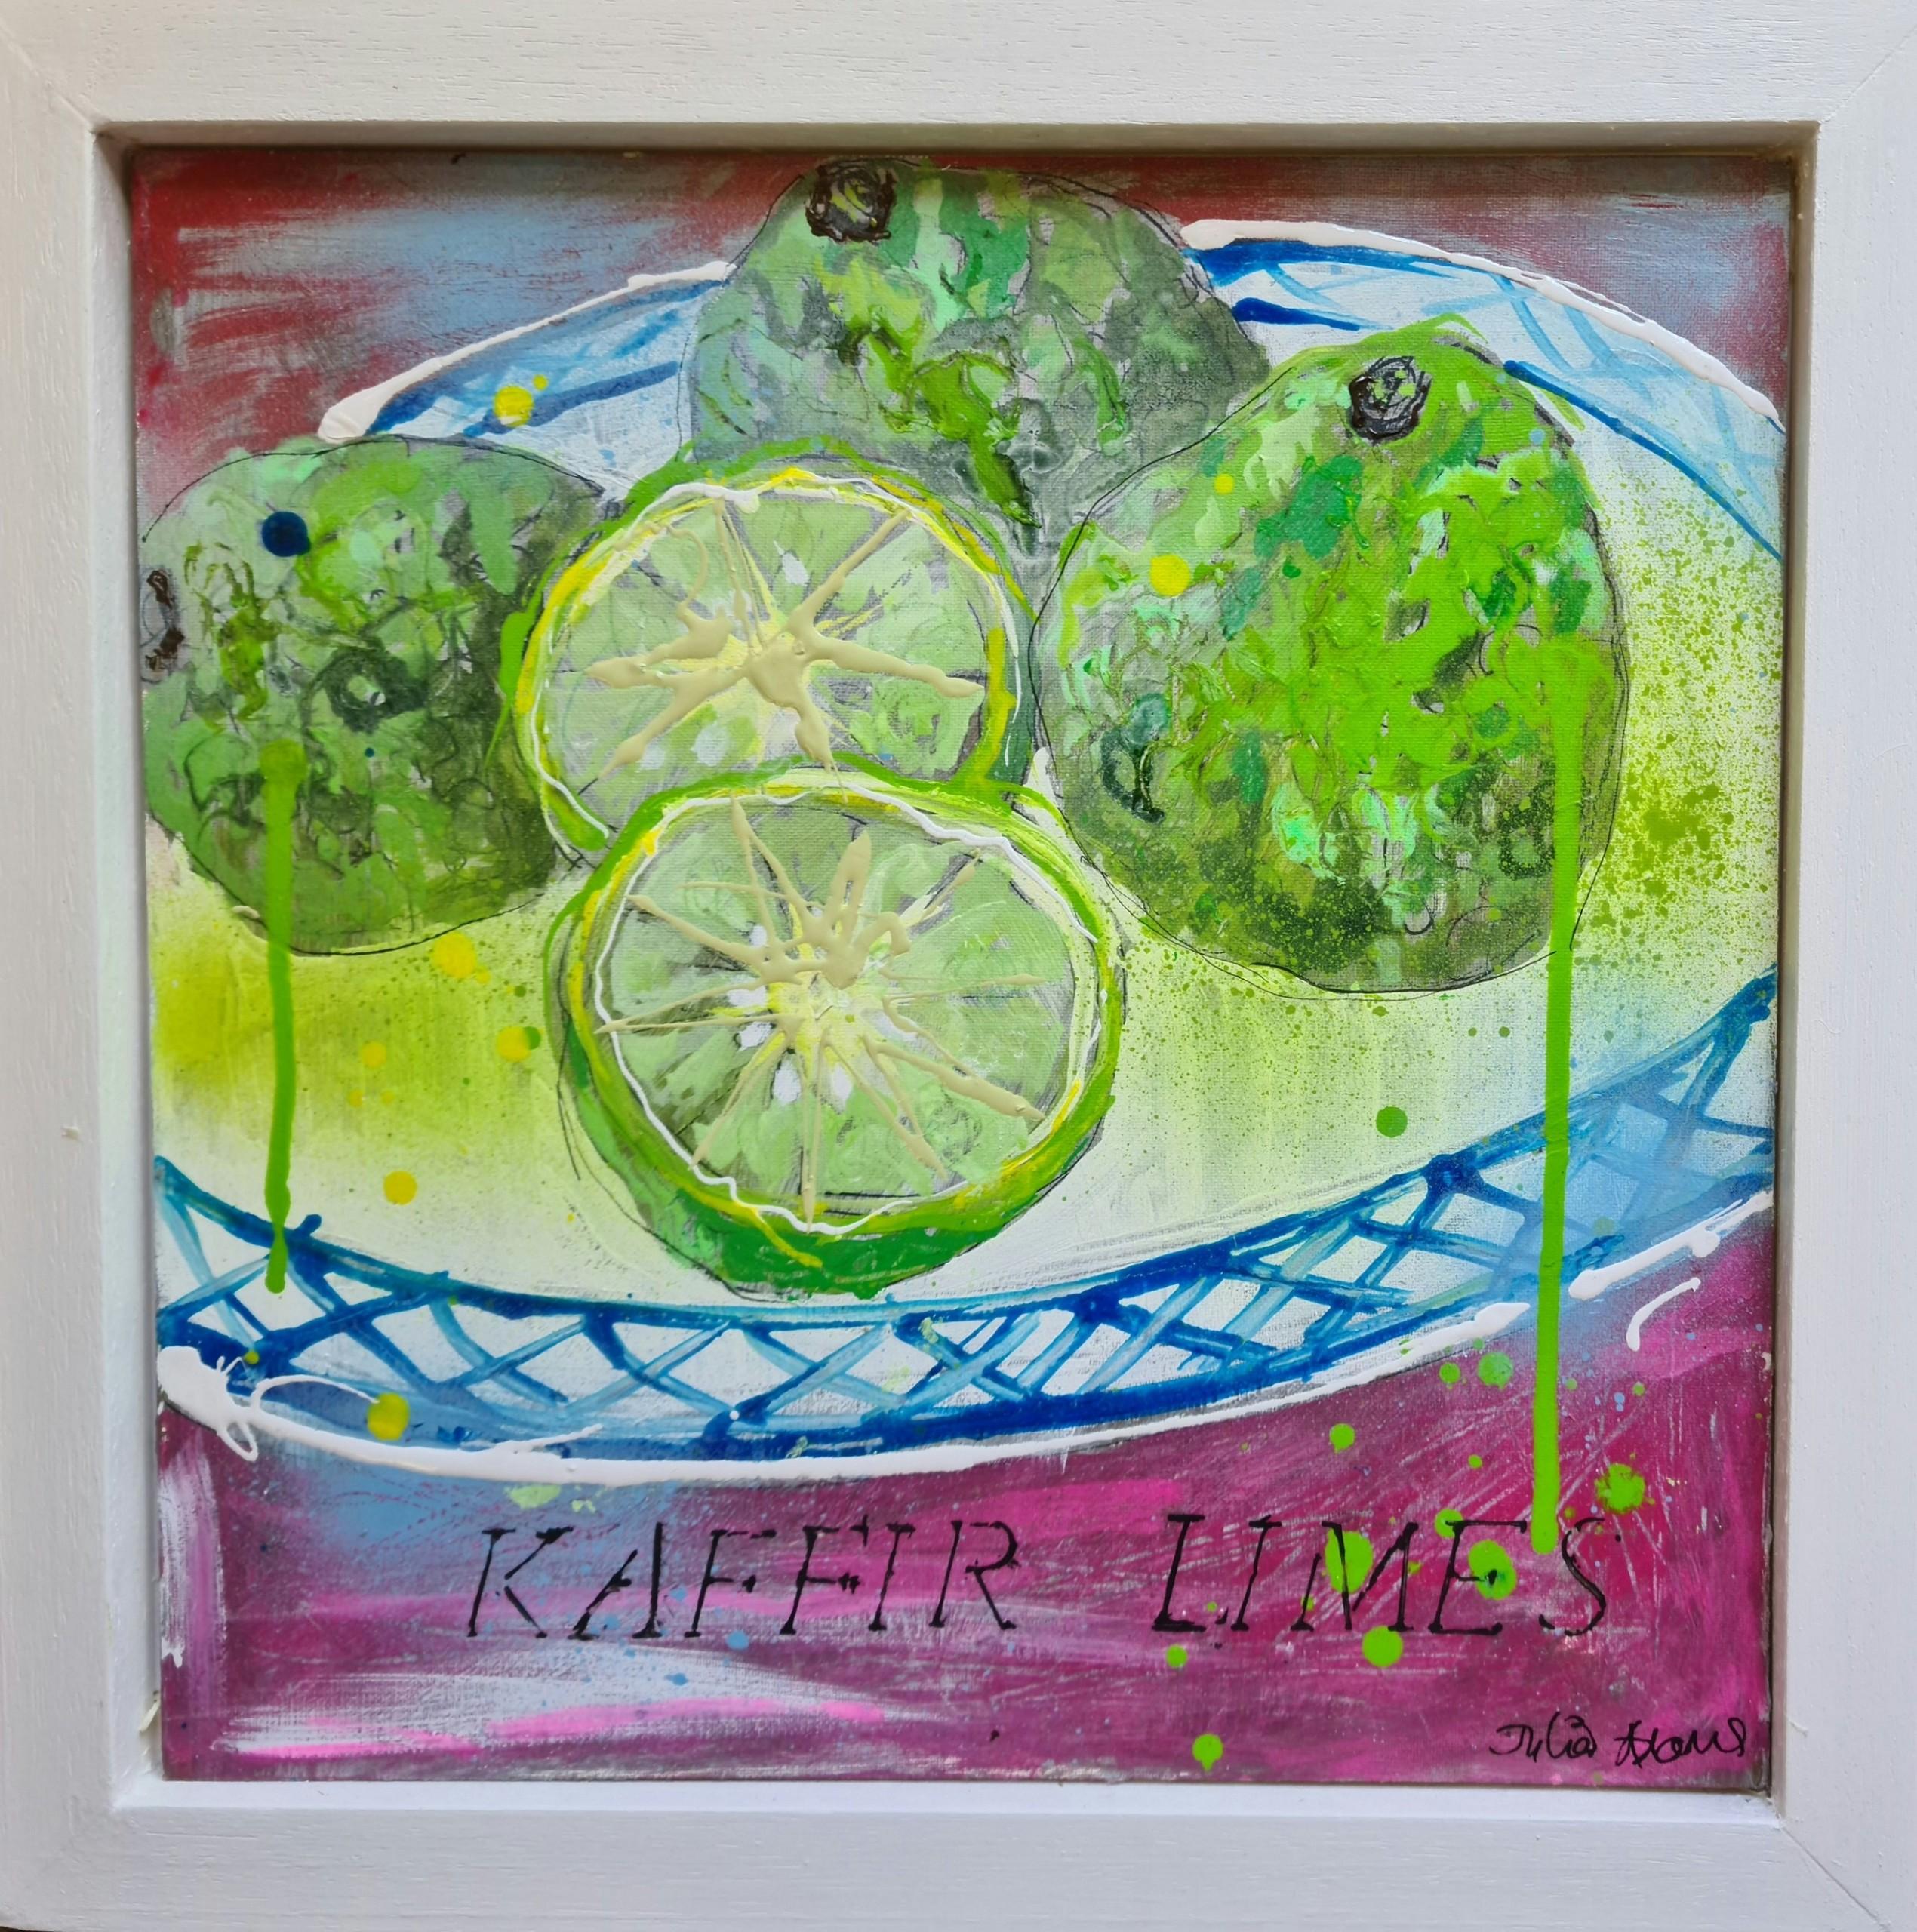 Kaffir Limes By Julia Adams [2021]

original
Ink, acrylic & spray paint on board
Image size: H:30 cm x W:30 cm
Complete Size of Unframed Work: H:30 cm x W:30 cm x D:0.5cm
Frame Size: H:2.5 cm x W:2.5 cm x D:2cm
Sold Framed
Please note that insitu